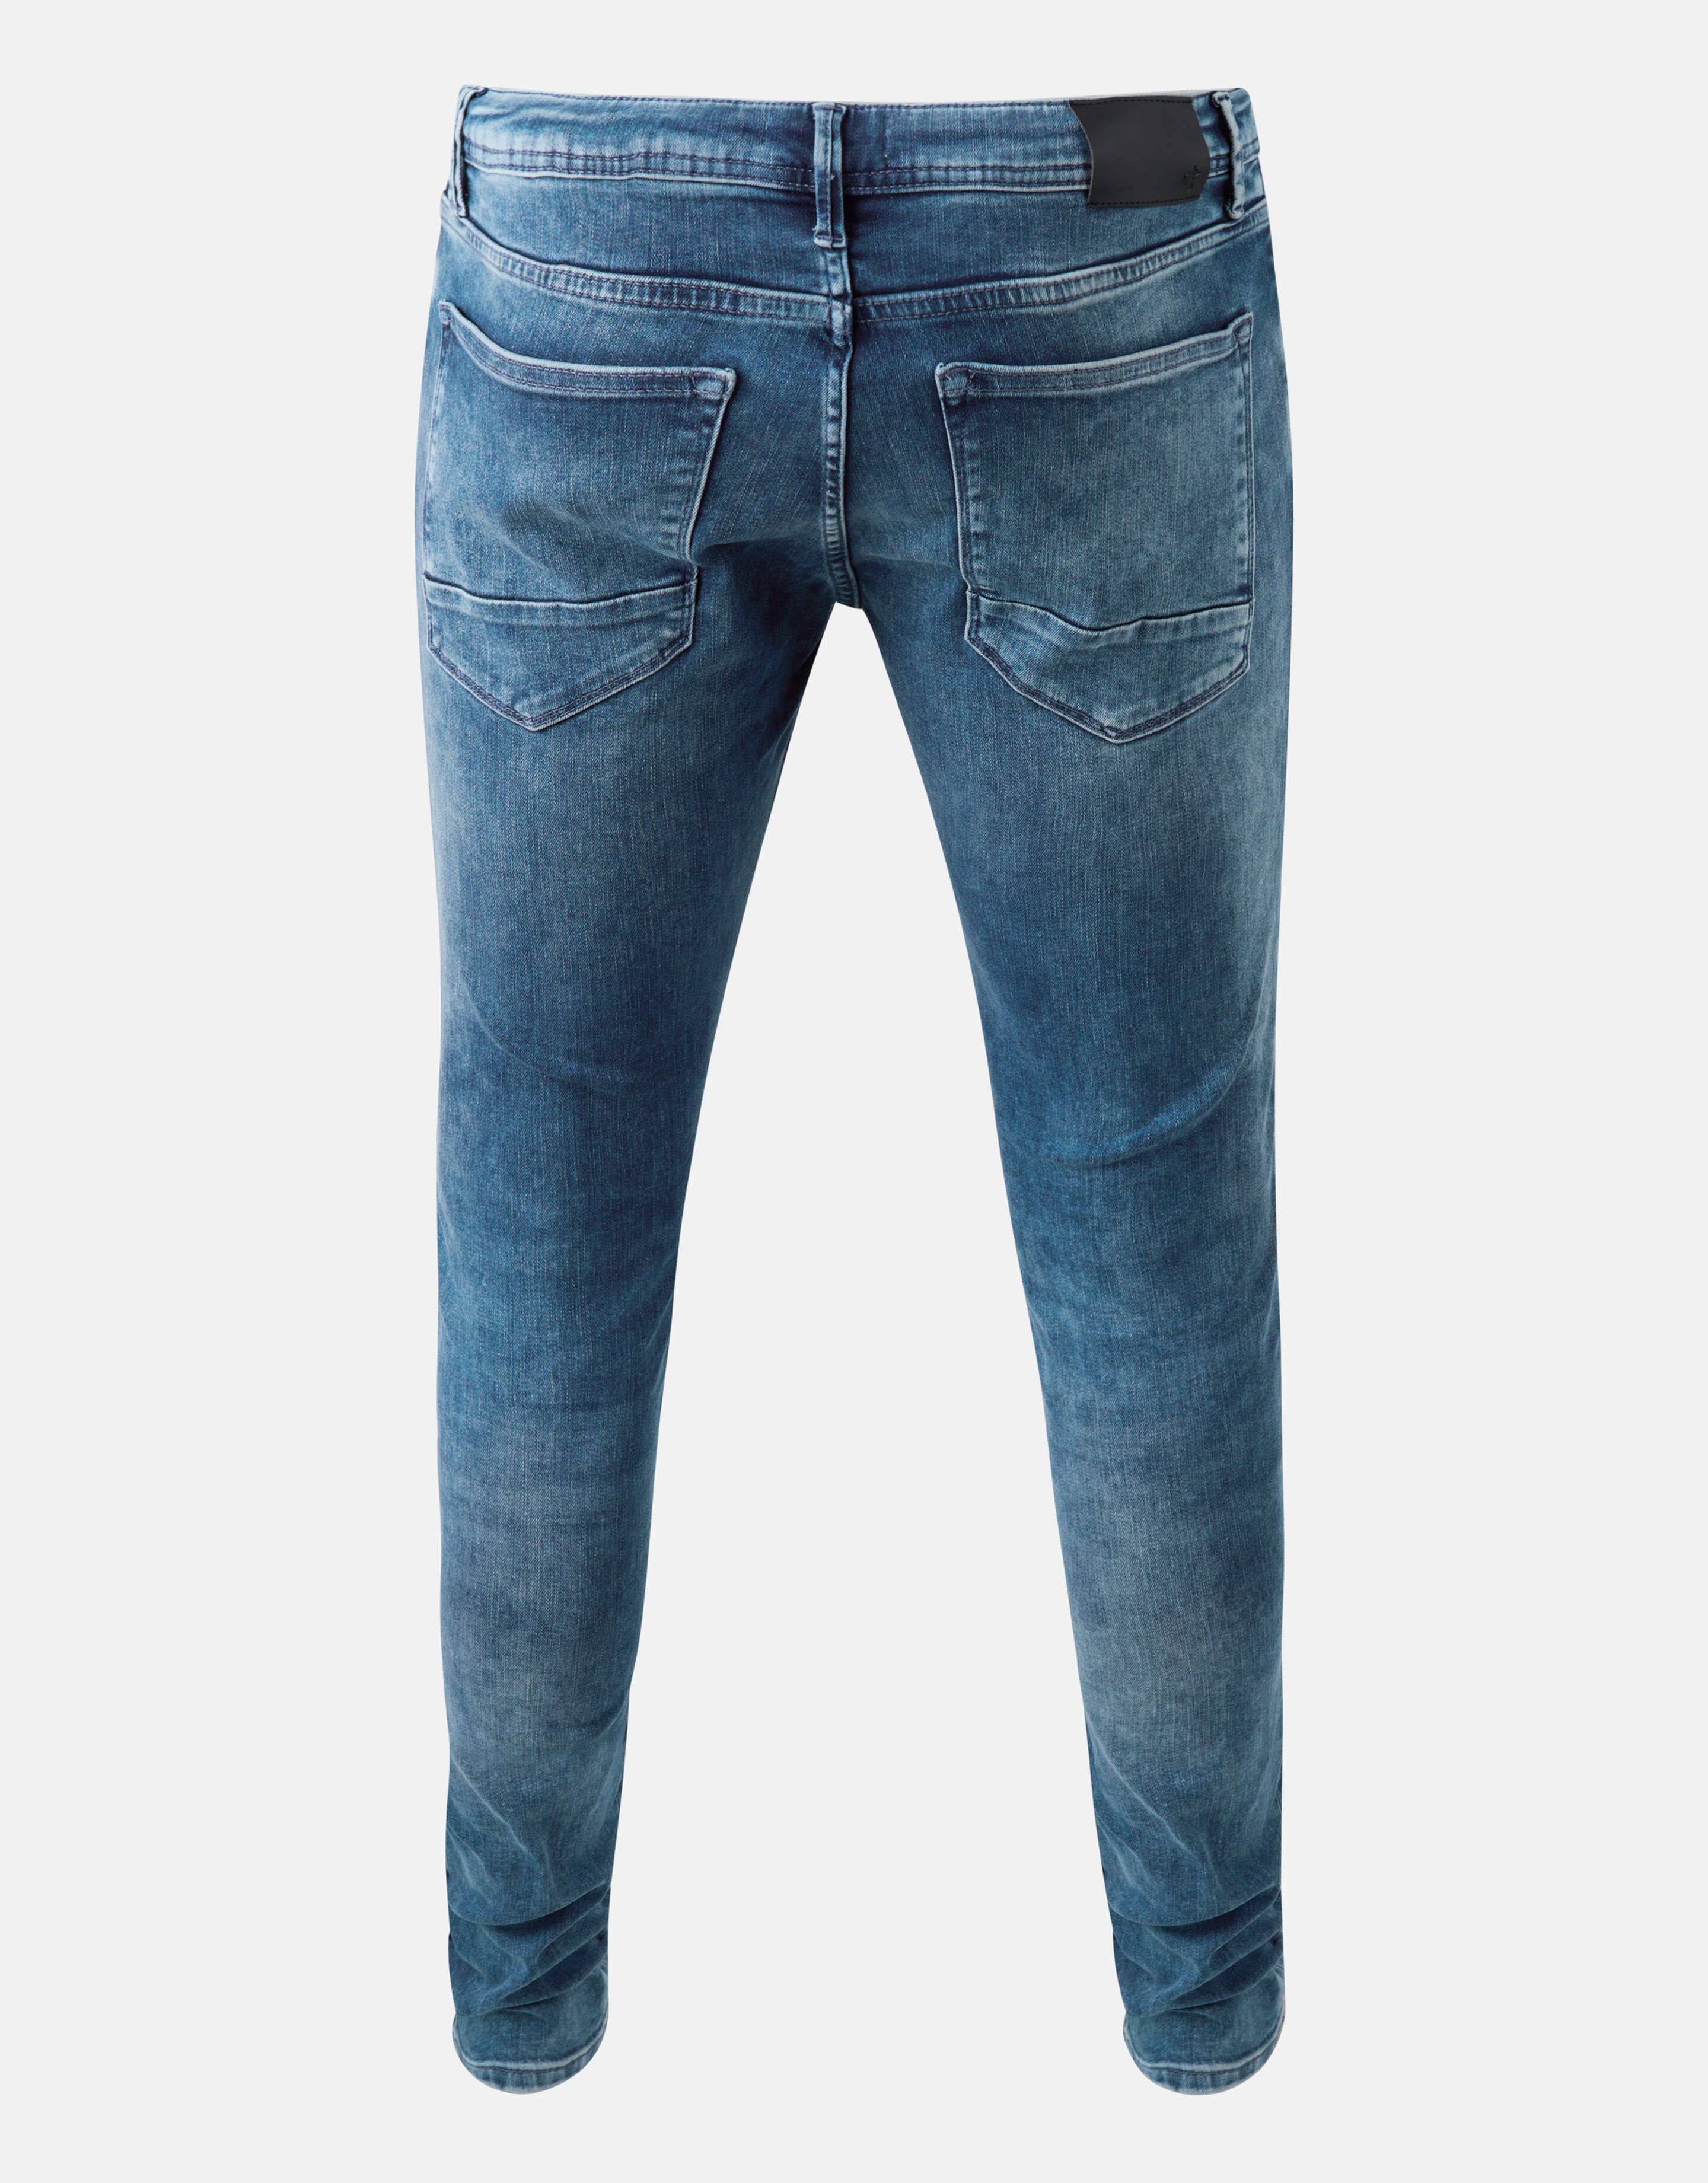 Leroy Skinny Jeans Jack Mediumstone L34 Refill